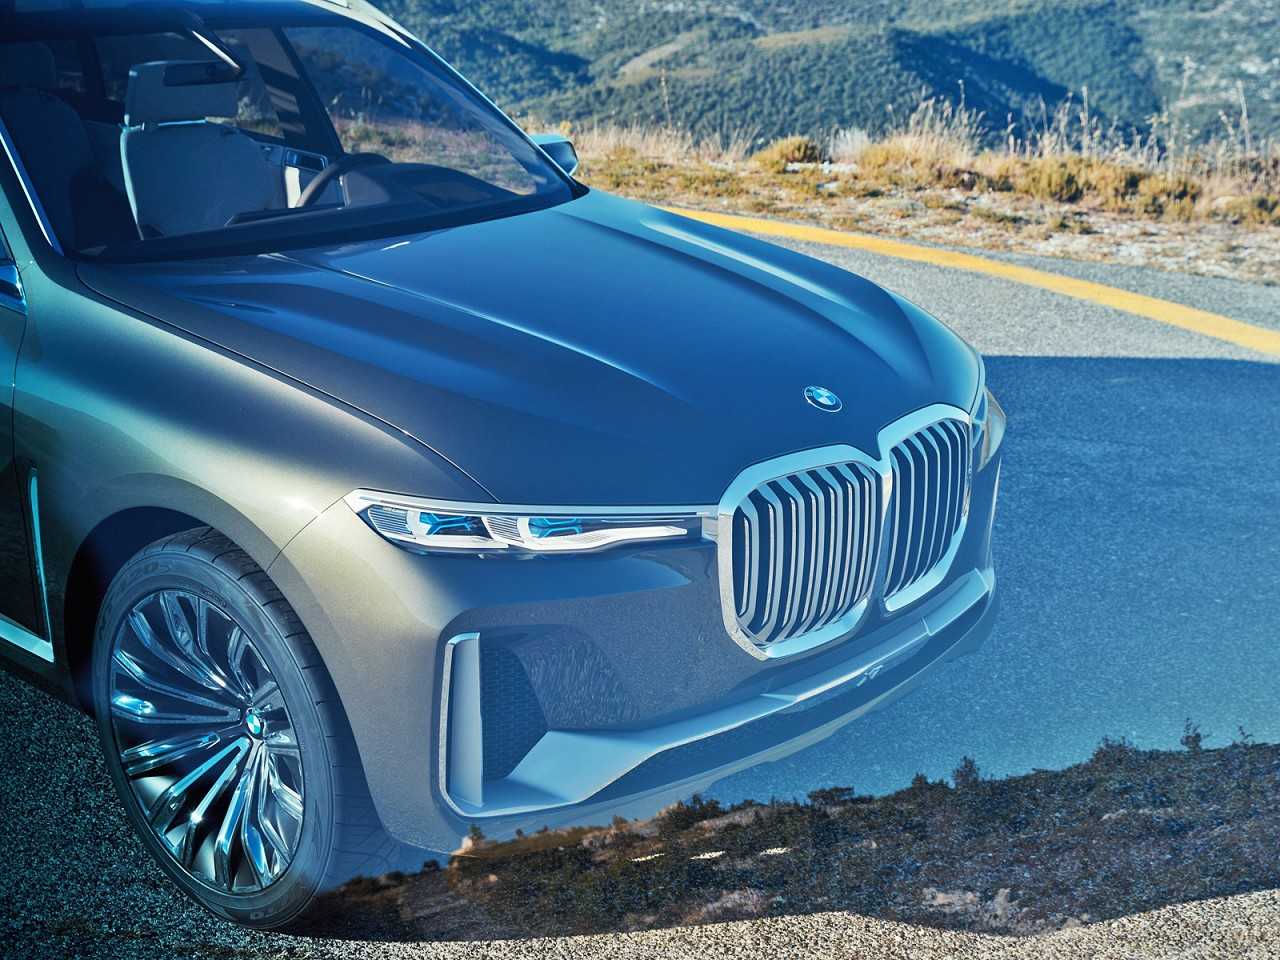 BMWX7 2018 - grade frontal